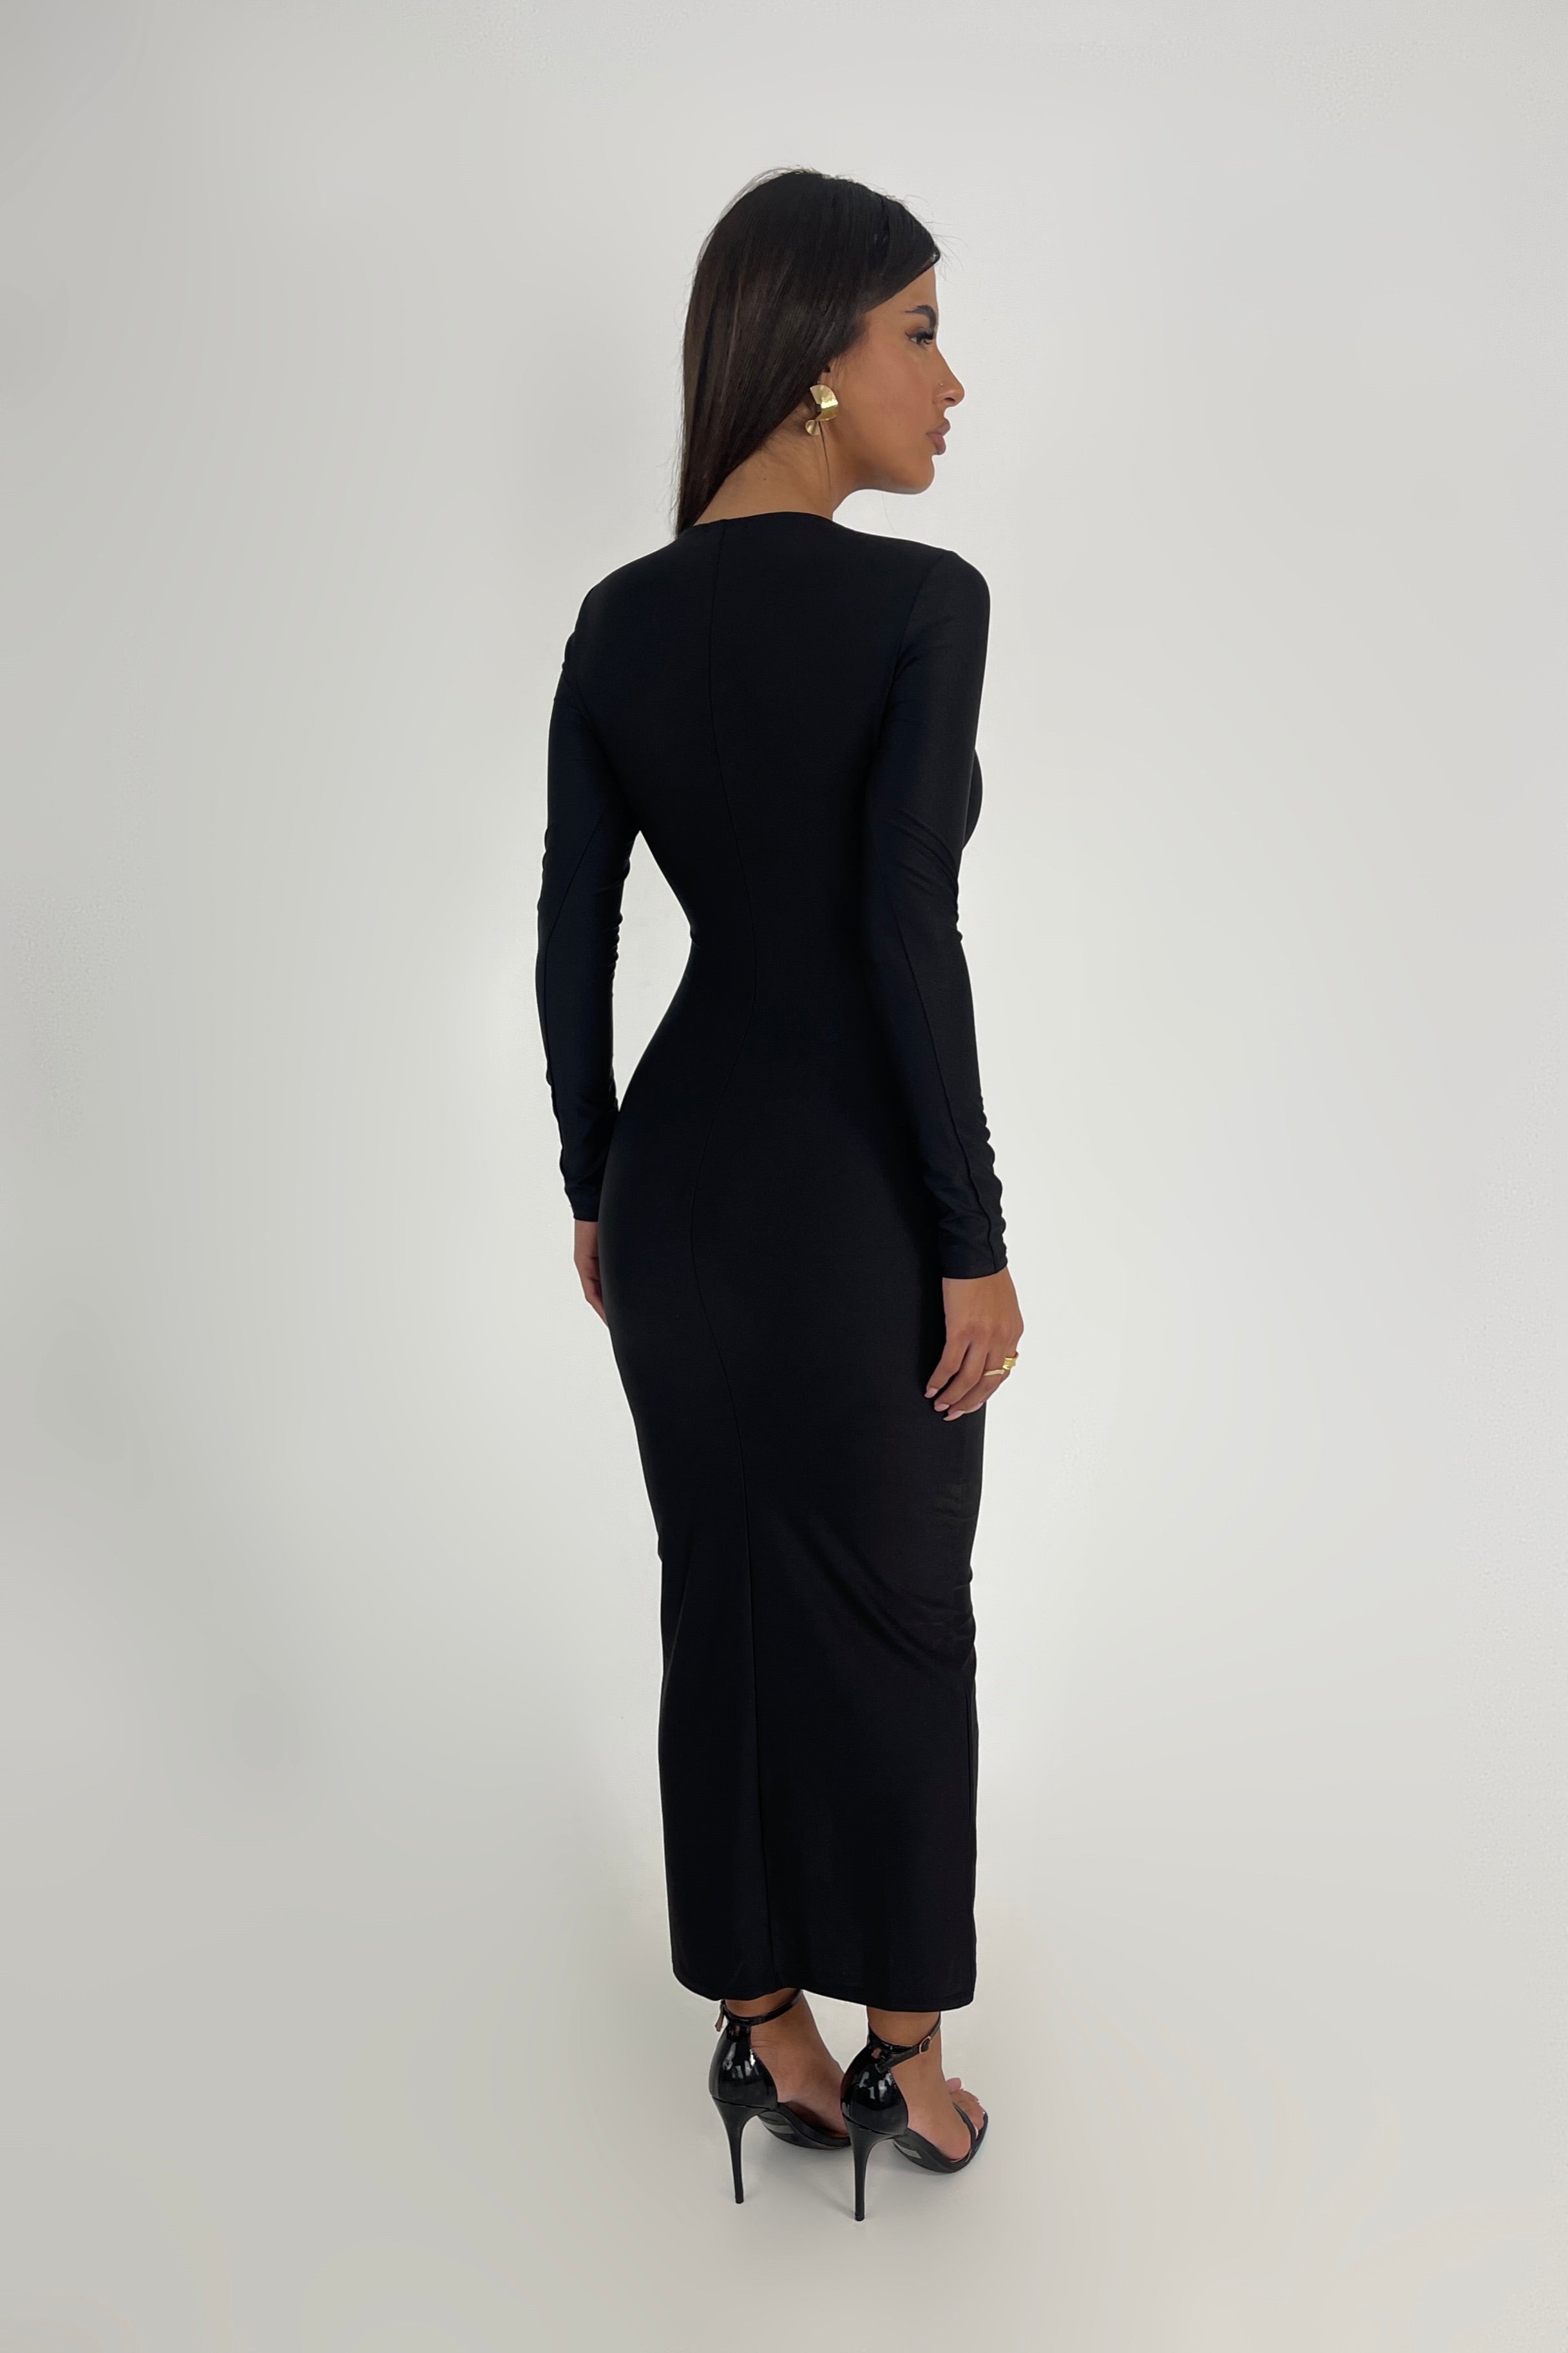 Solana Black Dress